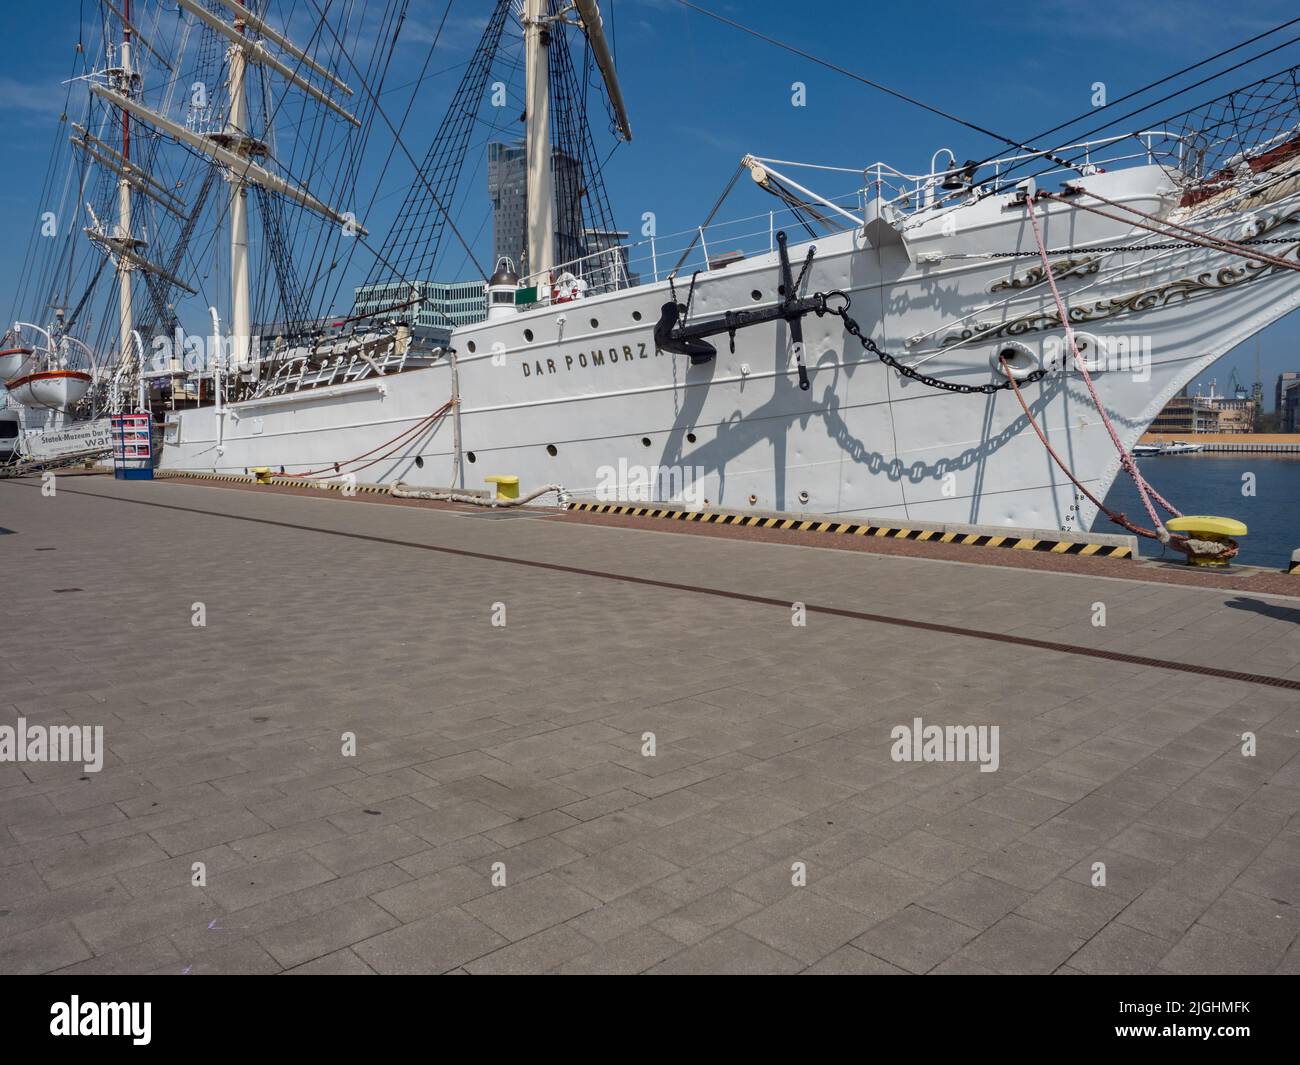 Gdynia, Poland - May, 2019: Polish training tall ship Dar Pomorza (Gift of Pomerania) - now museum ship in Port of Gdynia. East Europa. Stock Photo